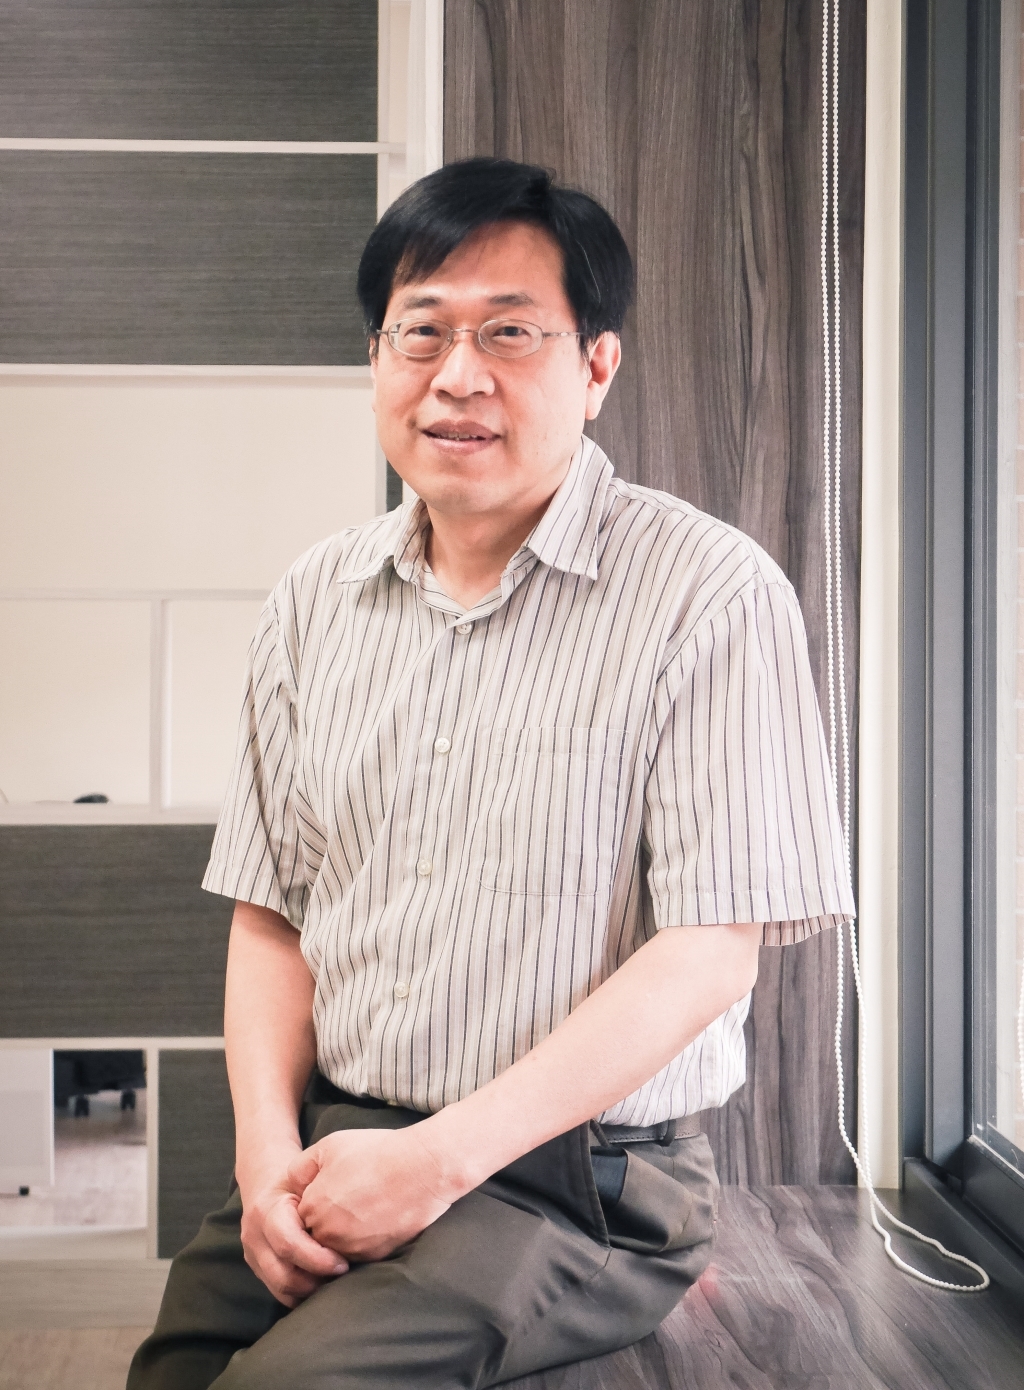 Prof. Alan Liu
